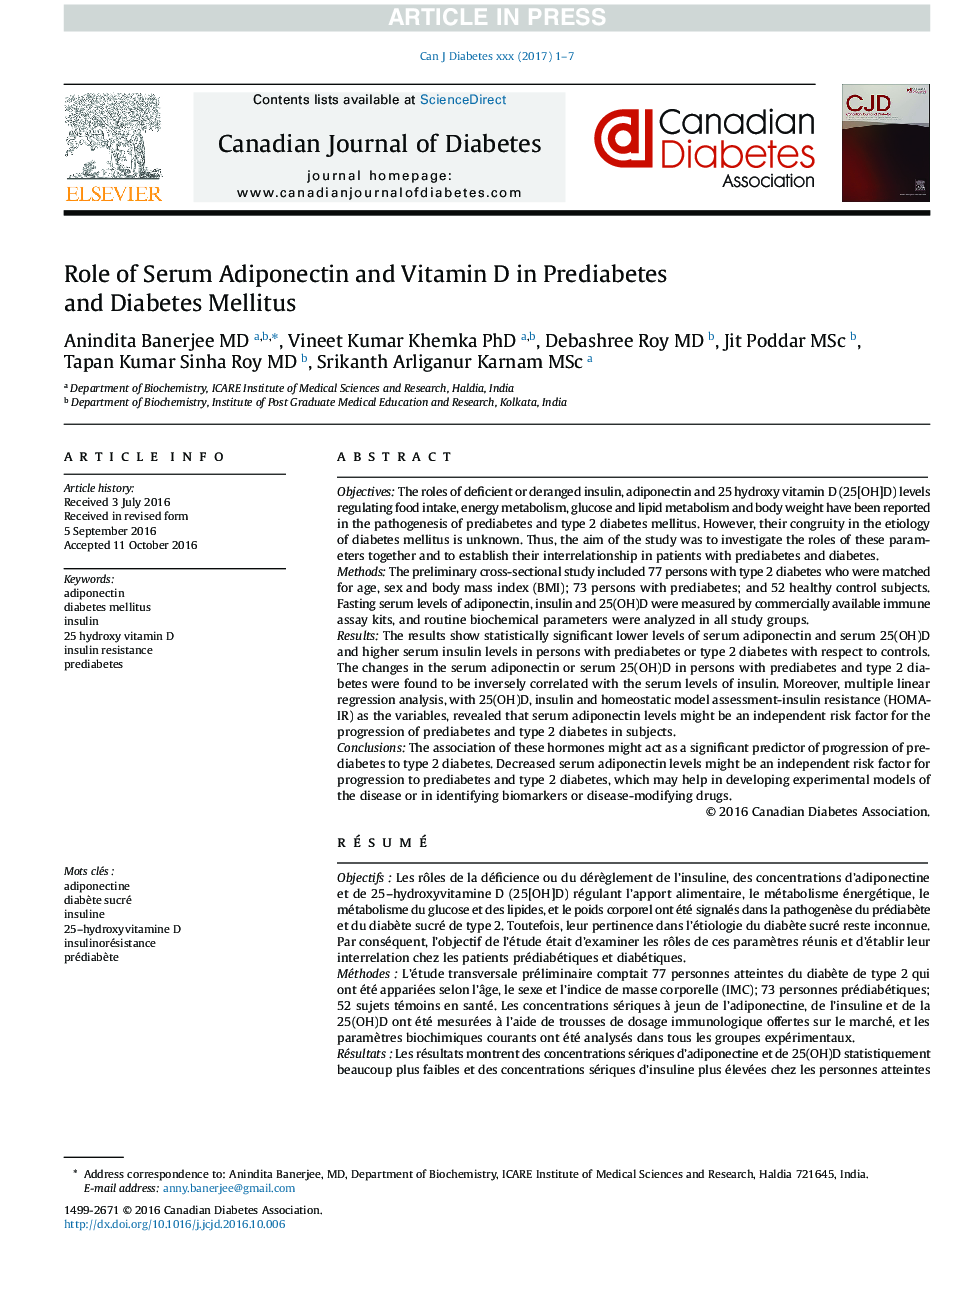 Role of Serum Adiponectin and Vitamin D in Prediabetes and Diabetes Mellitus